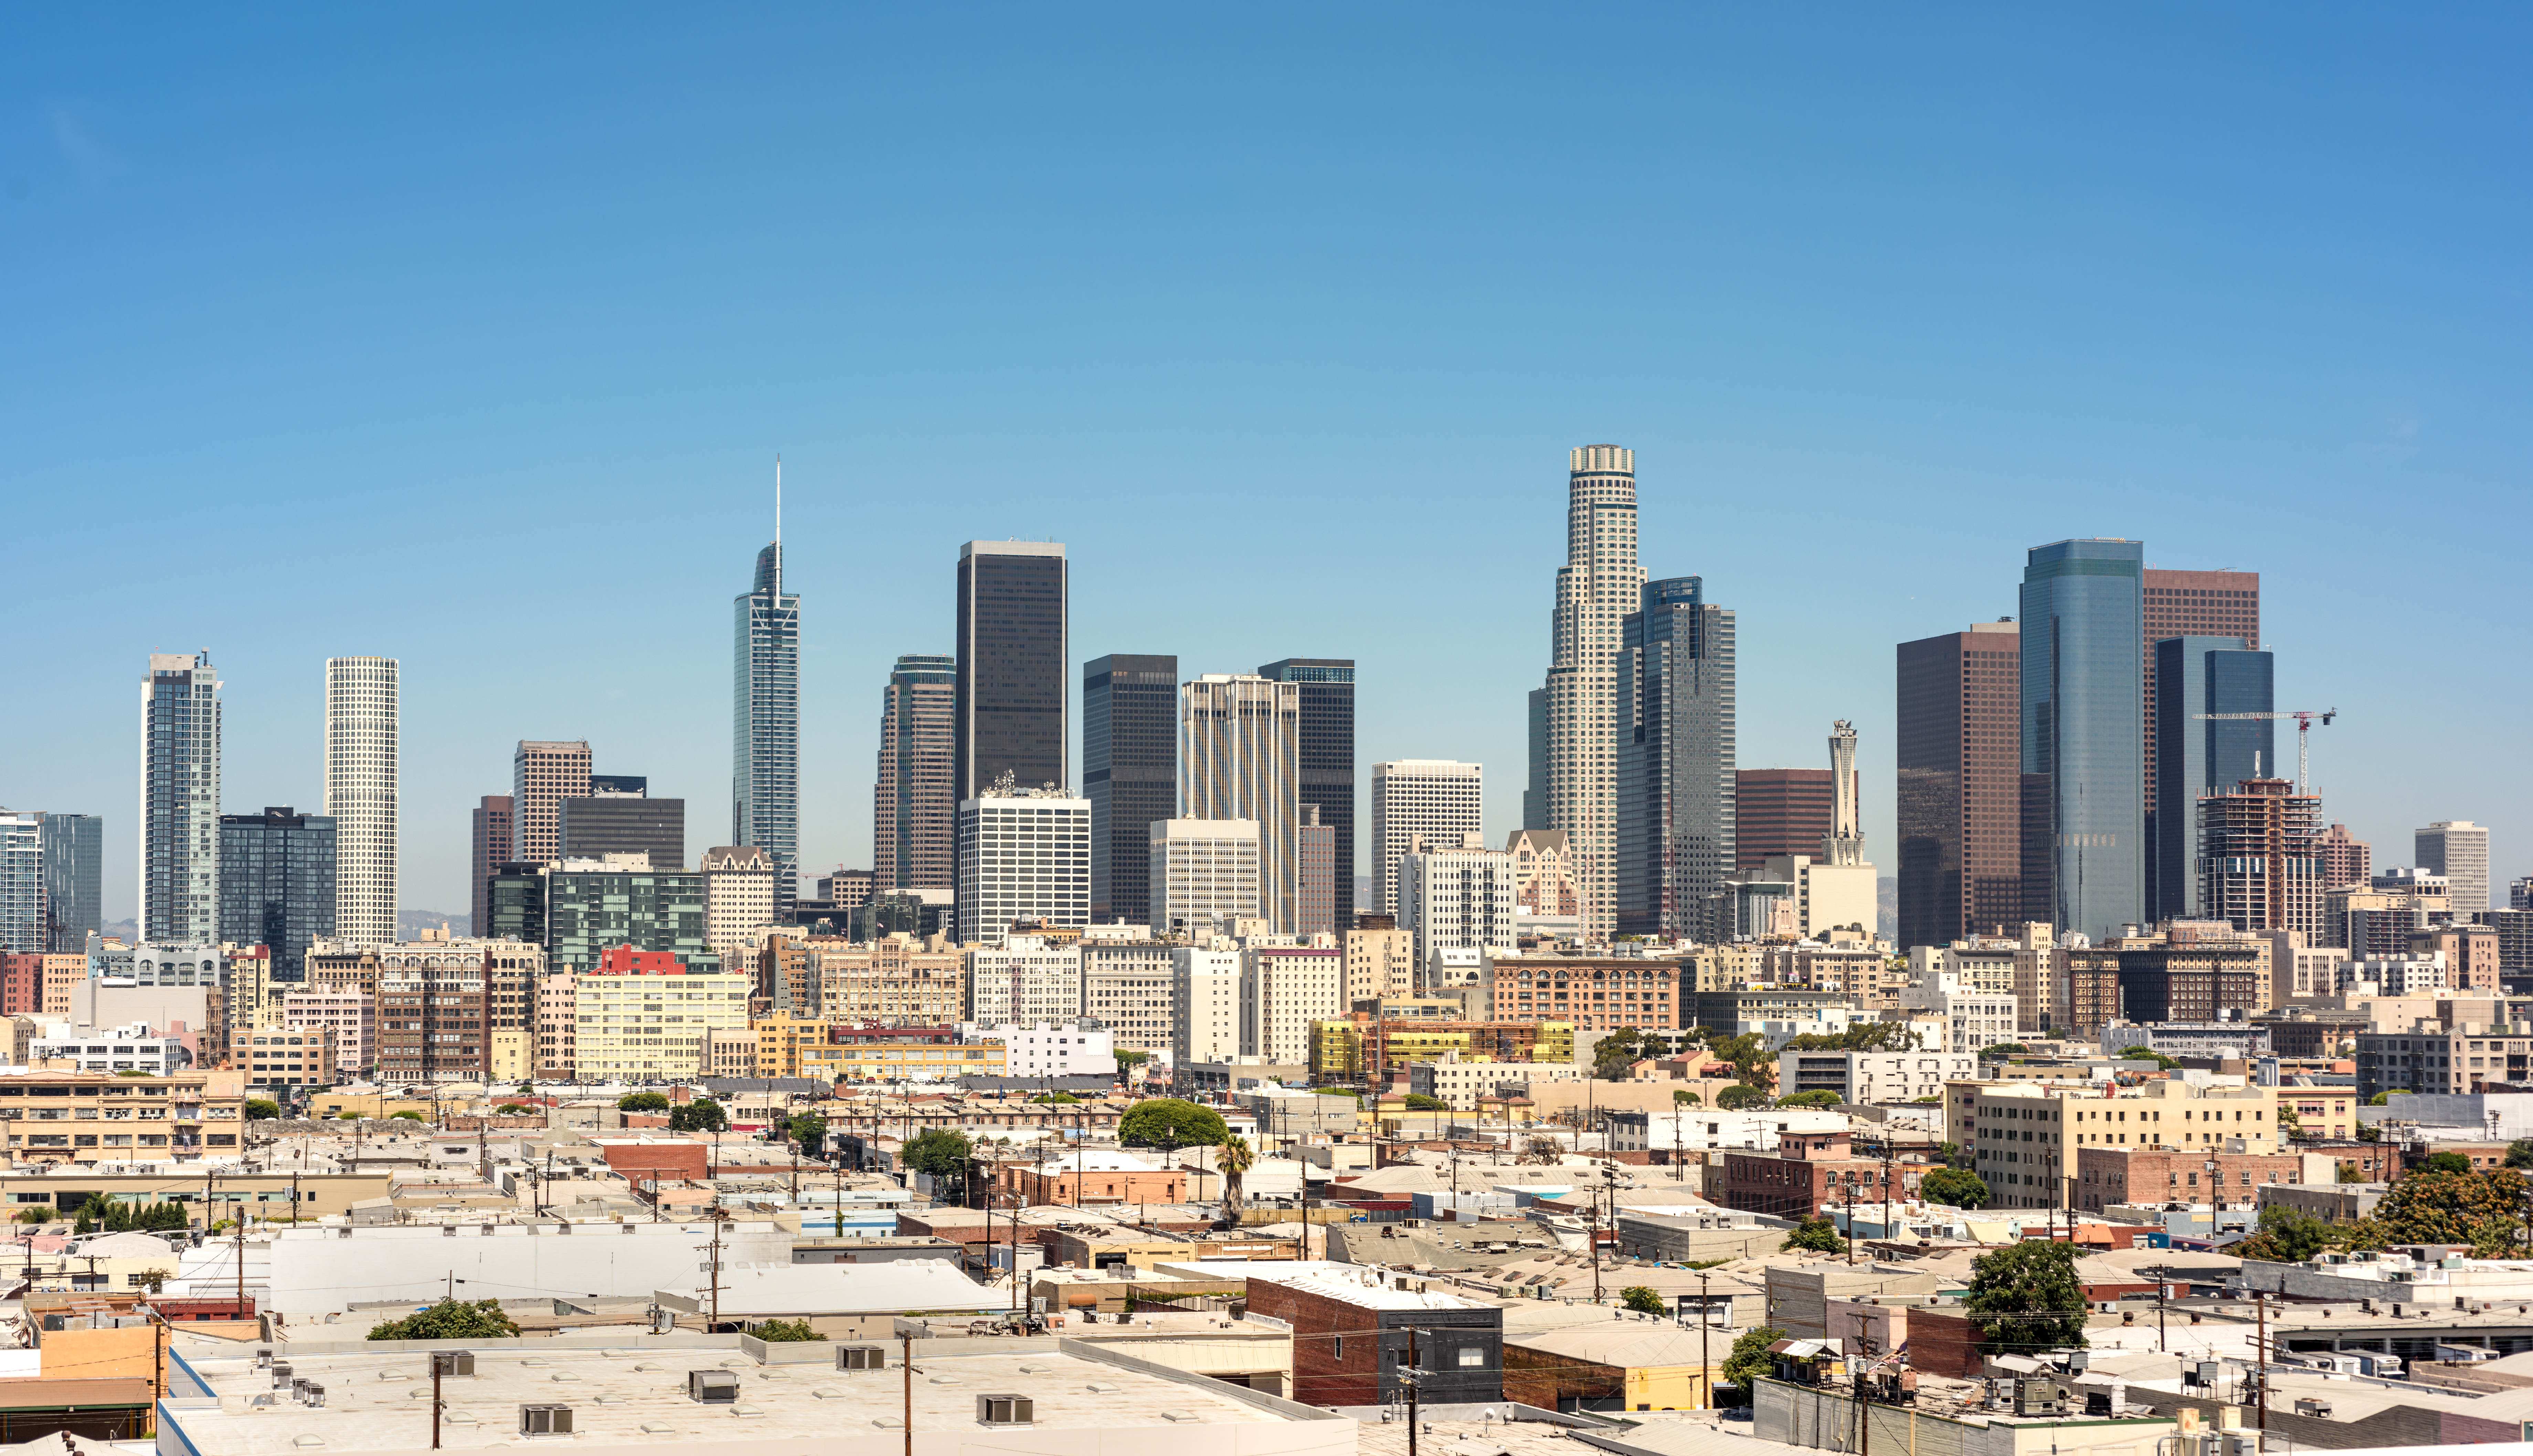 The Los Angeles skyline against a blue sky.